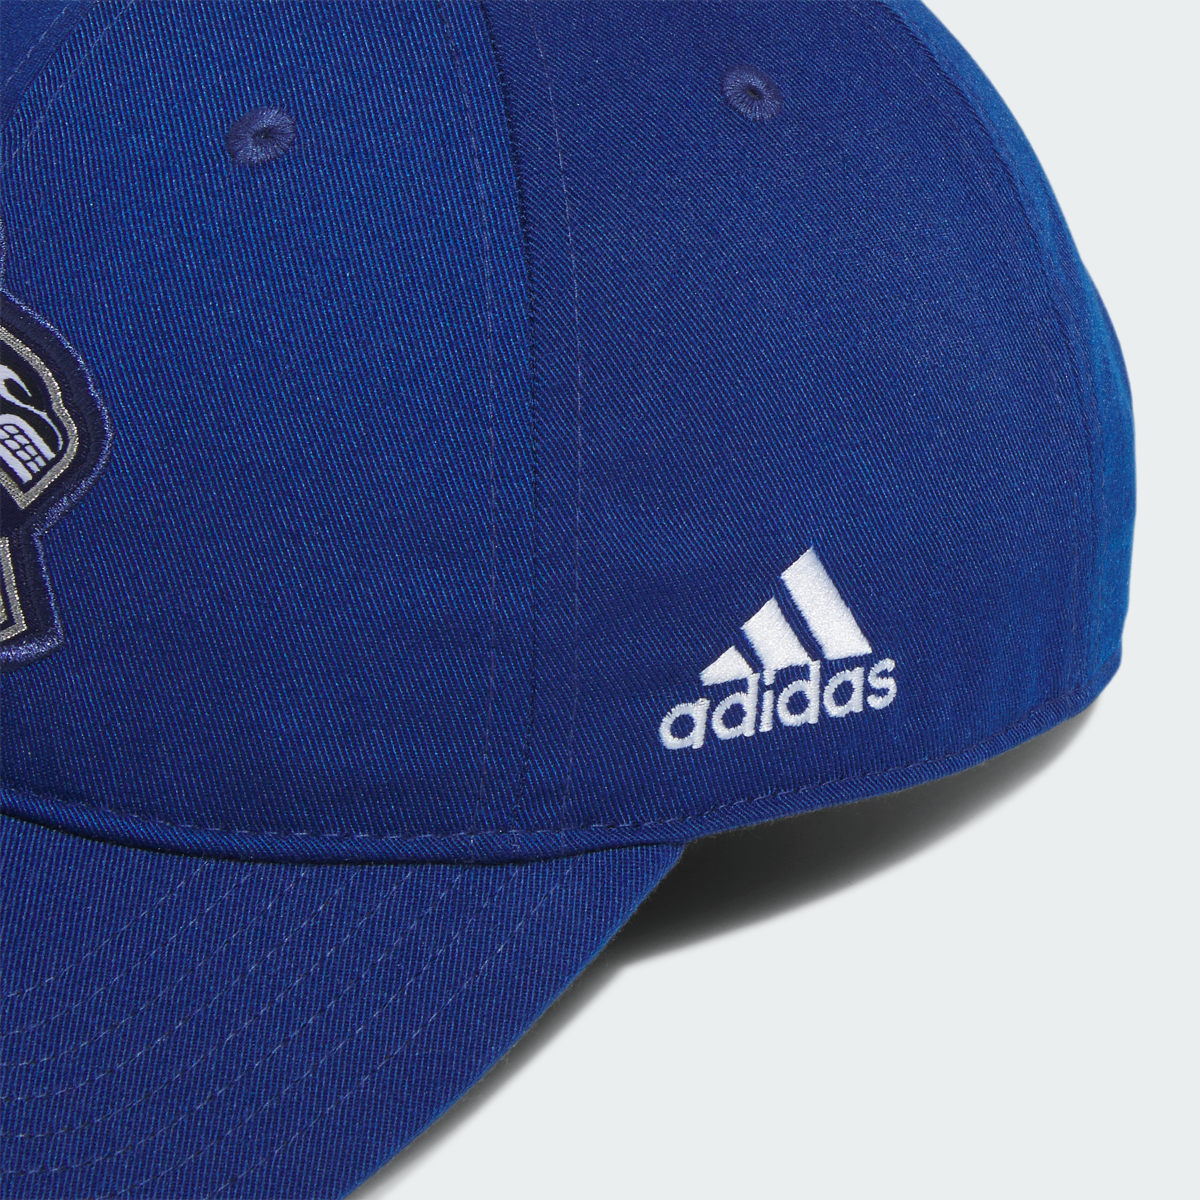 Adidas Canucks Slouch Adjustable Hat. 5